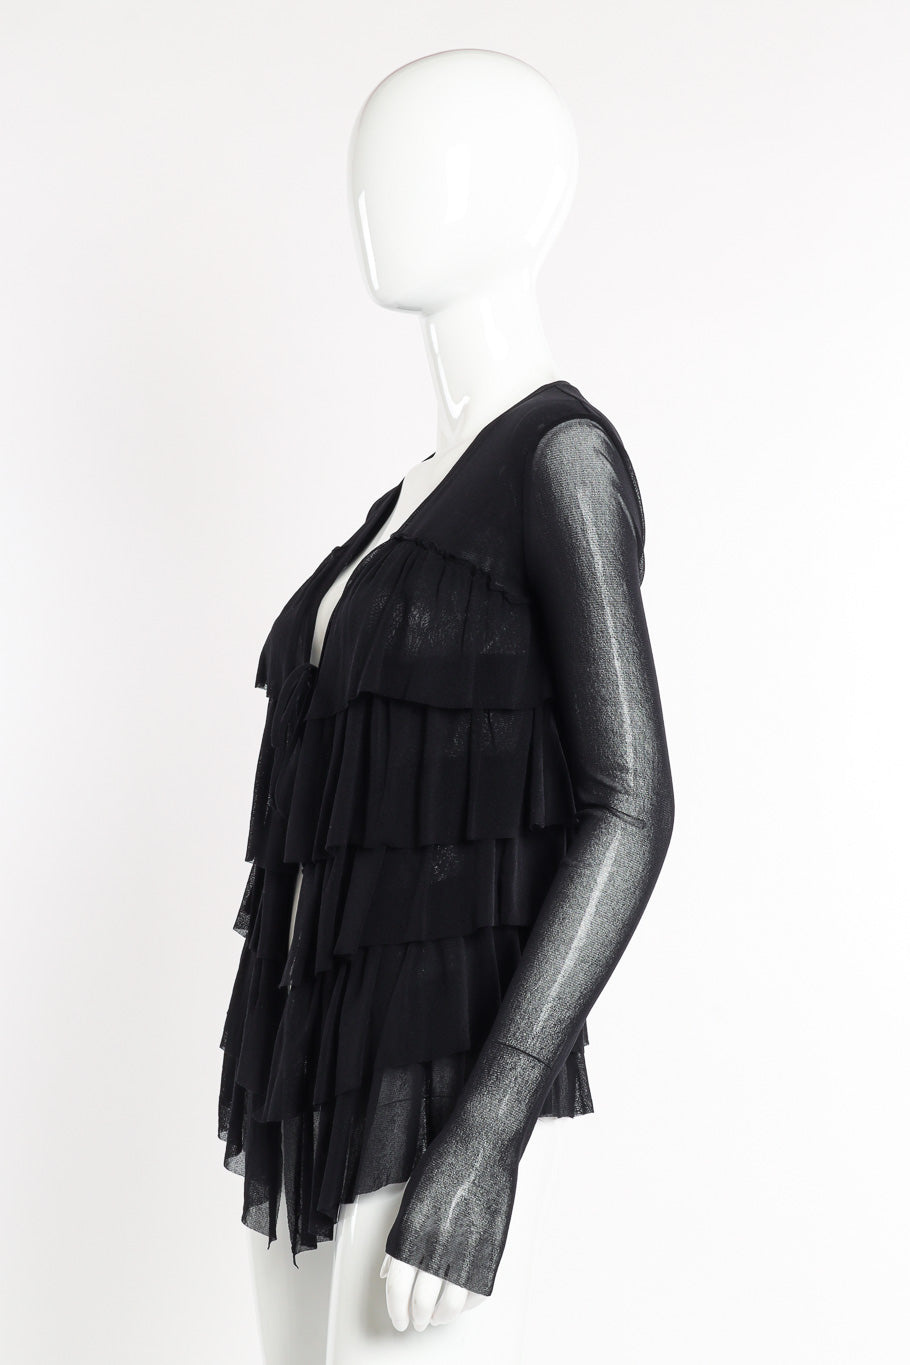 Jean Paul Gaultier Tiered Ruffle Mesh Cardigan side view on mannequin @recessla